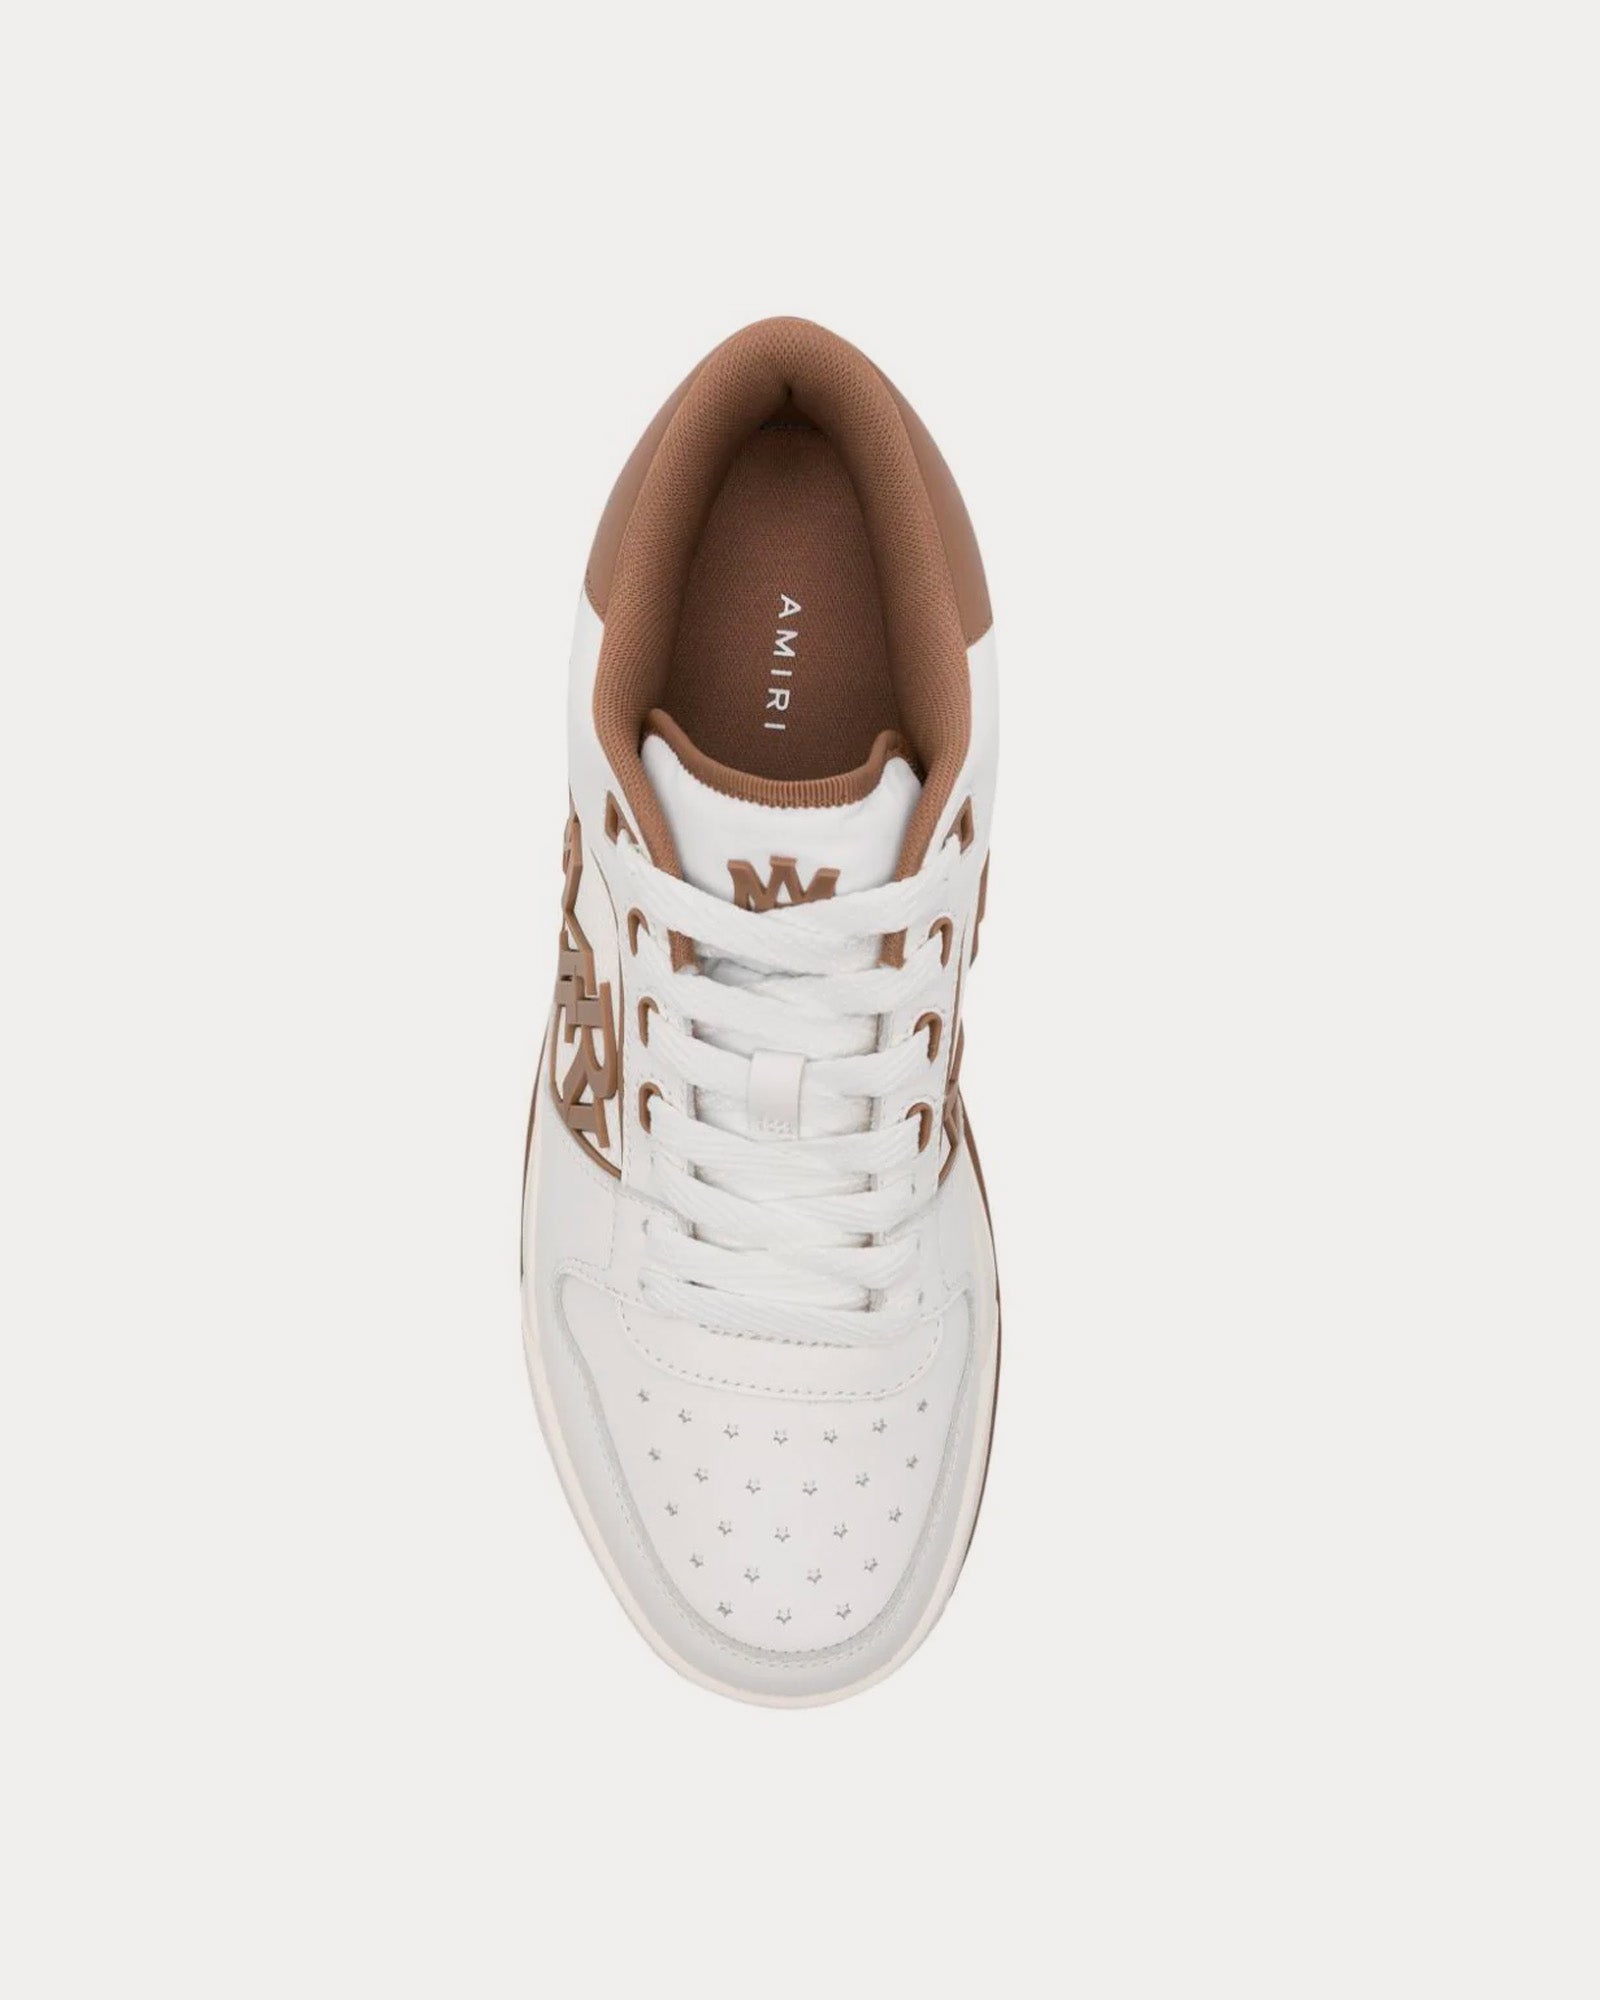 AMIRI - Classic White / Brown Low Top Sneakers